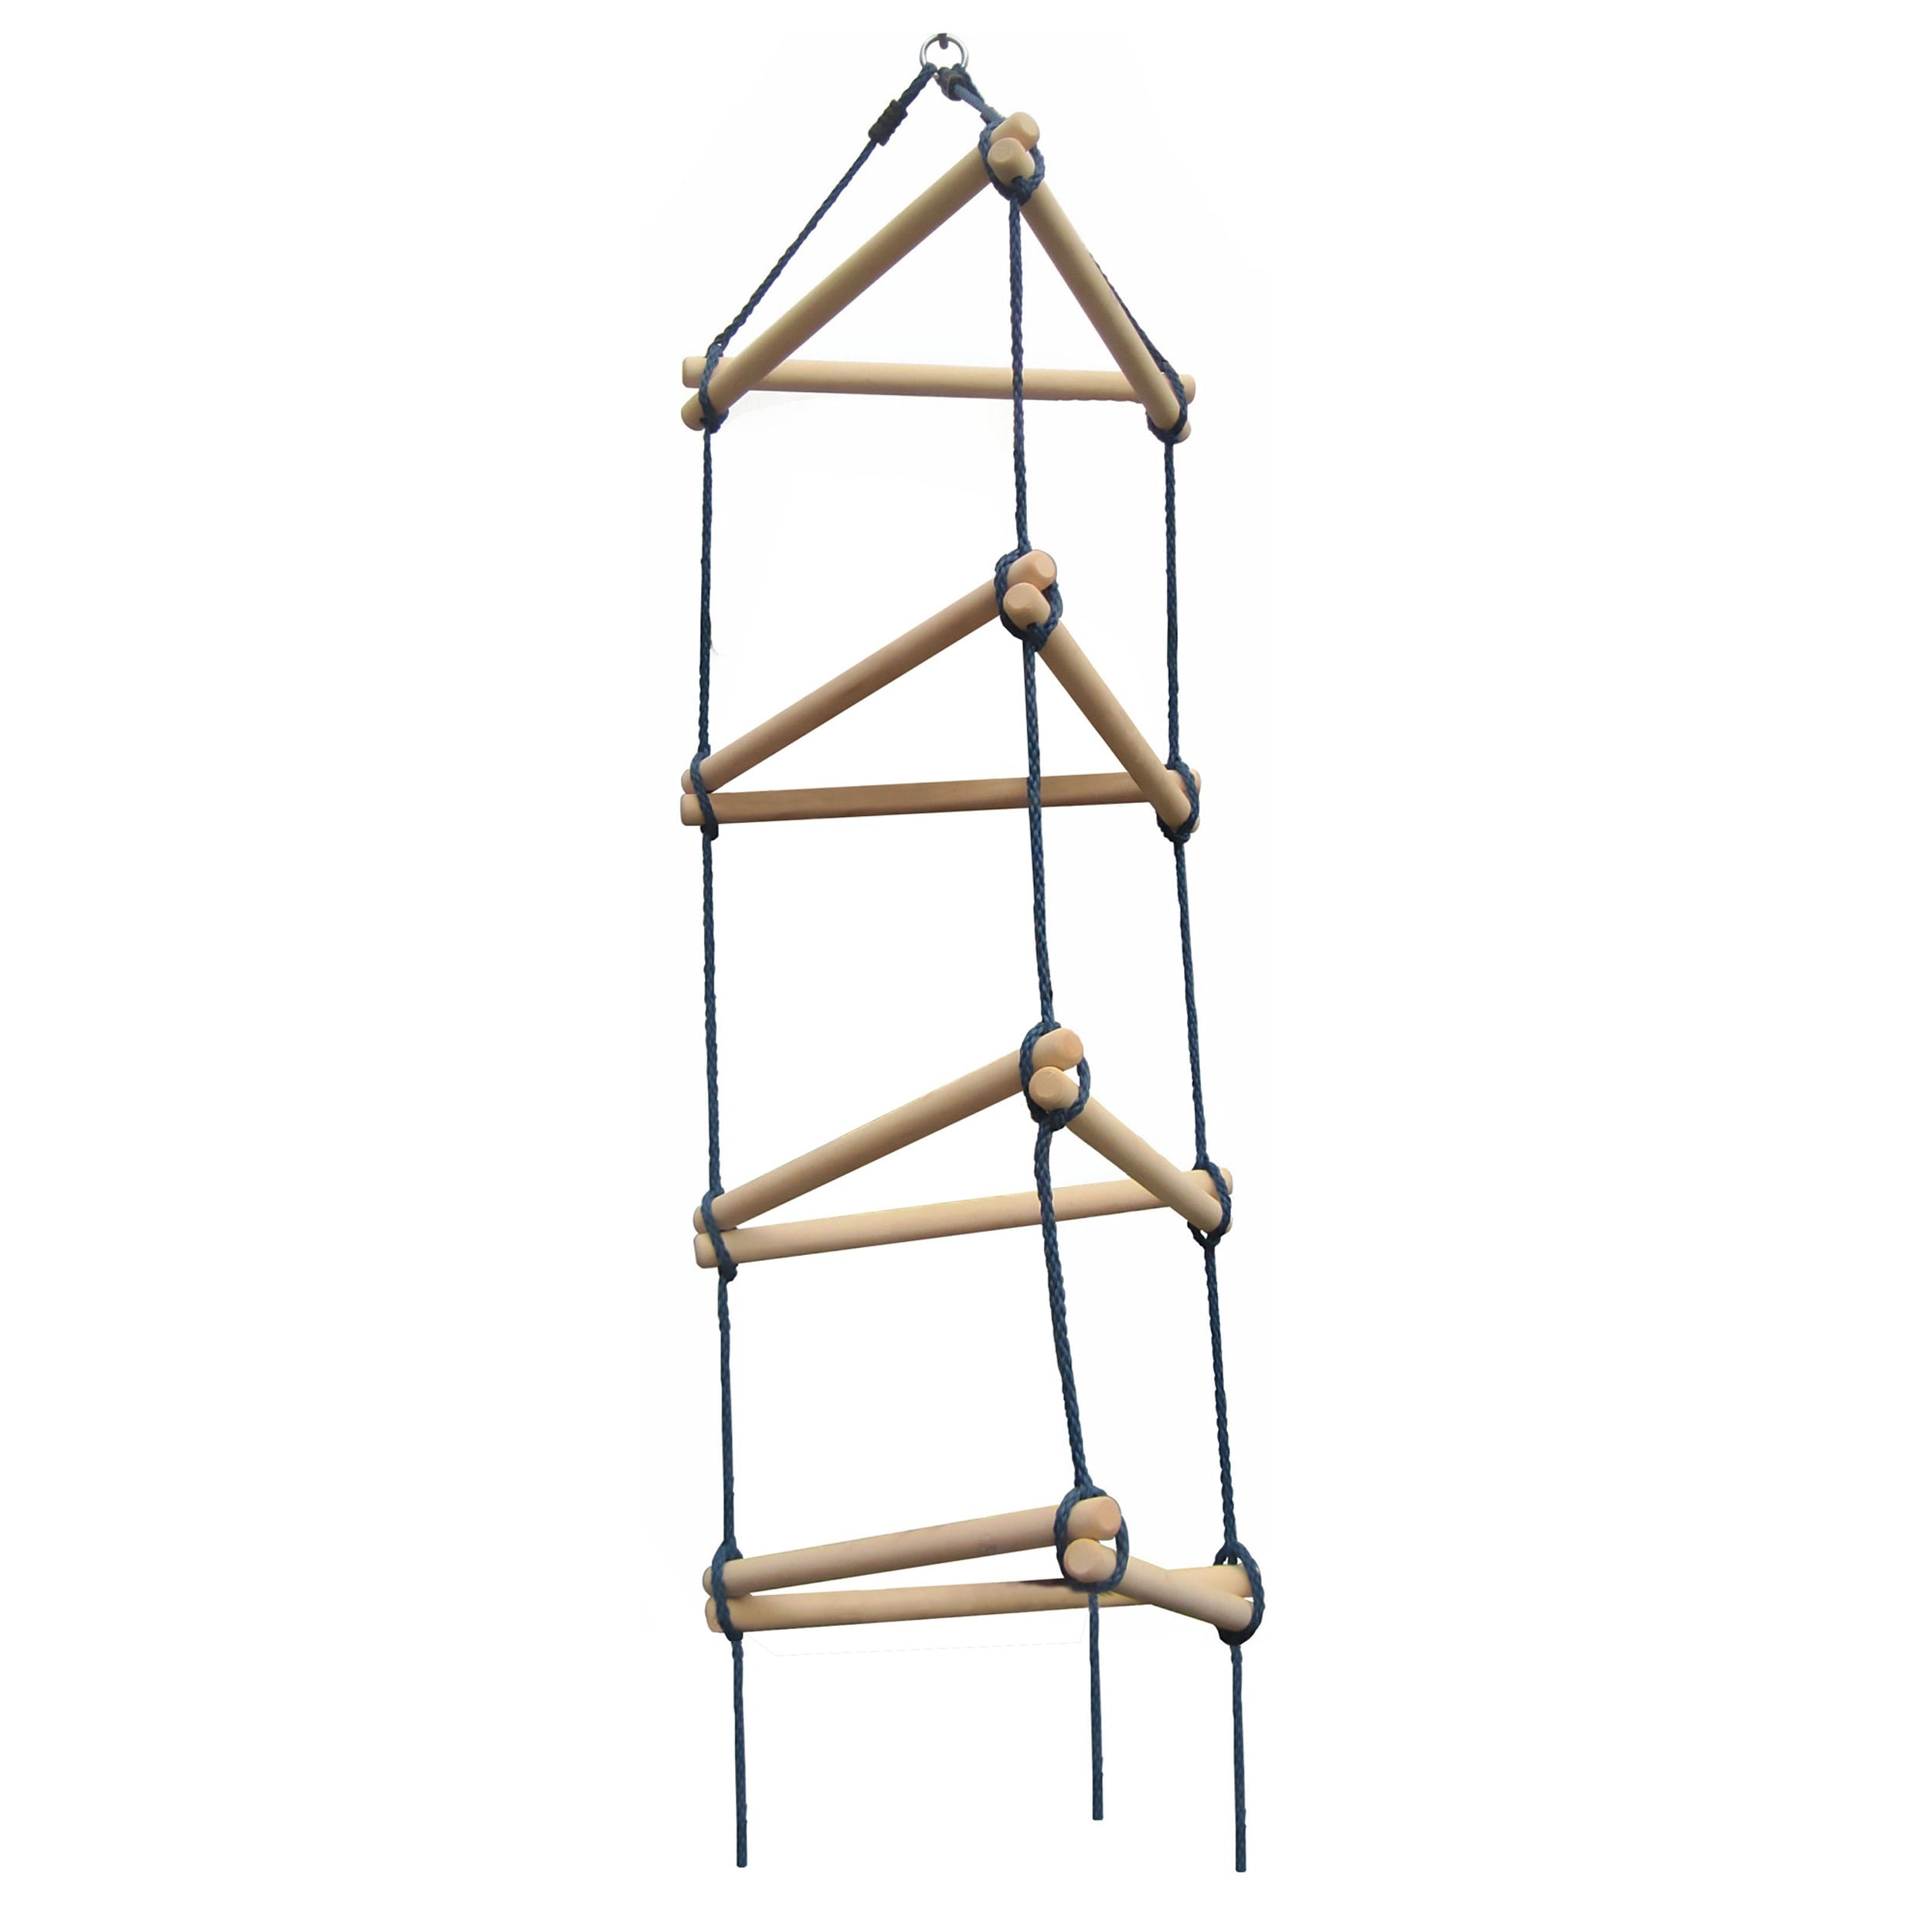 Swing n slide Triangular Rope Ladder